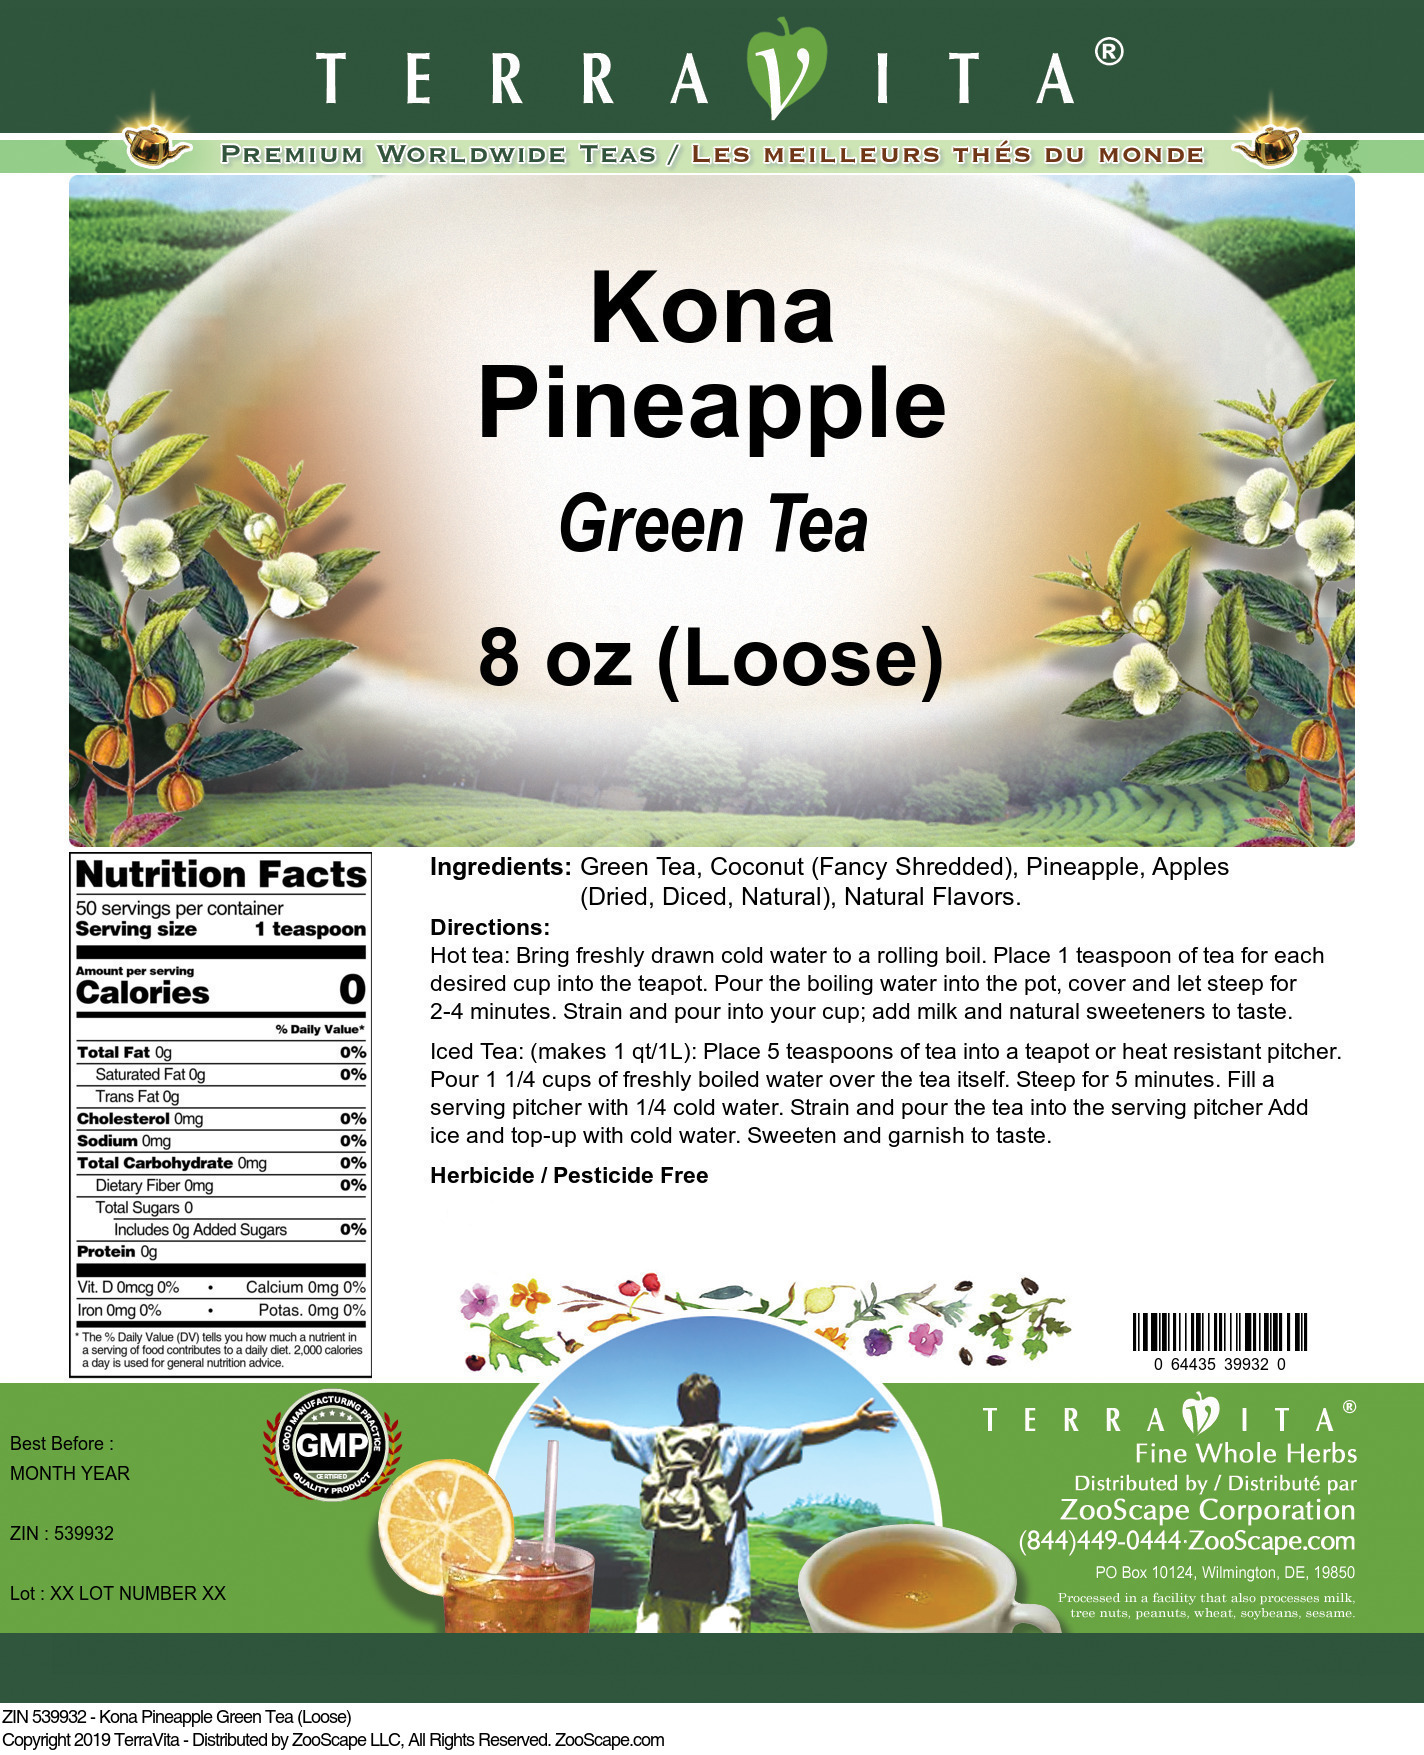 Kona Pineapple Green Tea (Loose) - Label